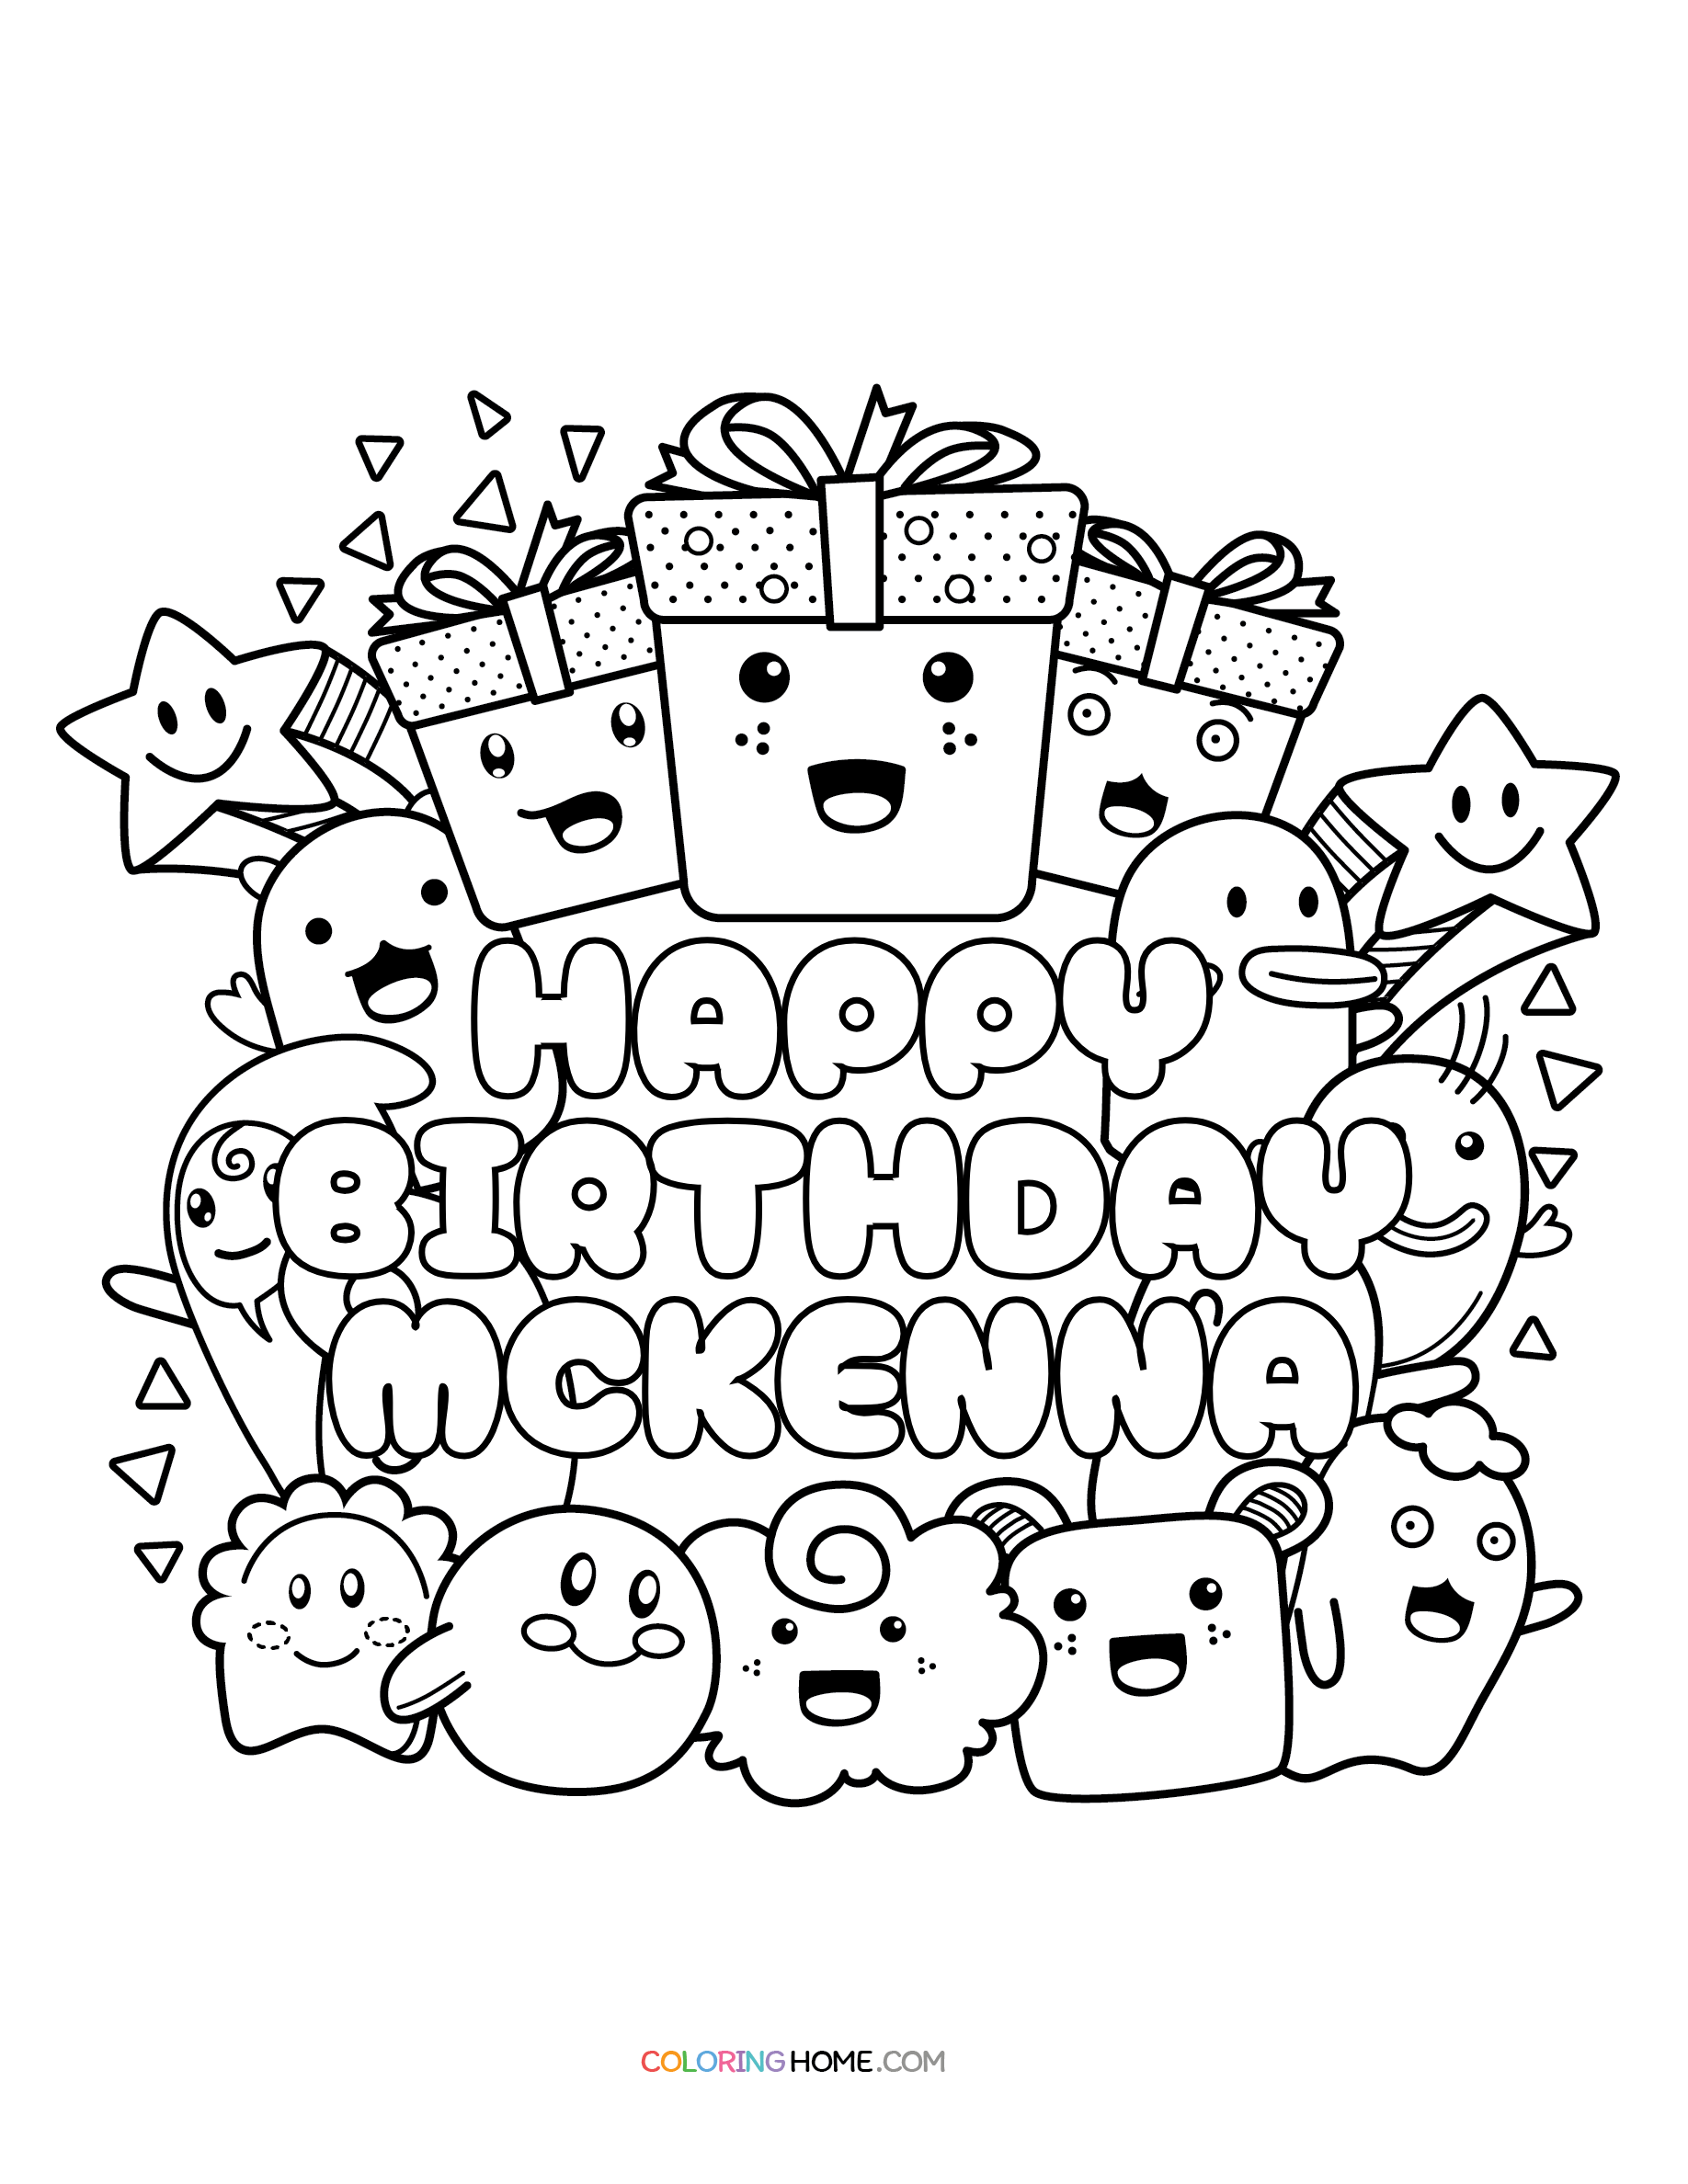 Happy Birthday Mckenna coloring page